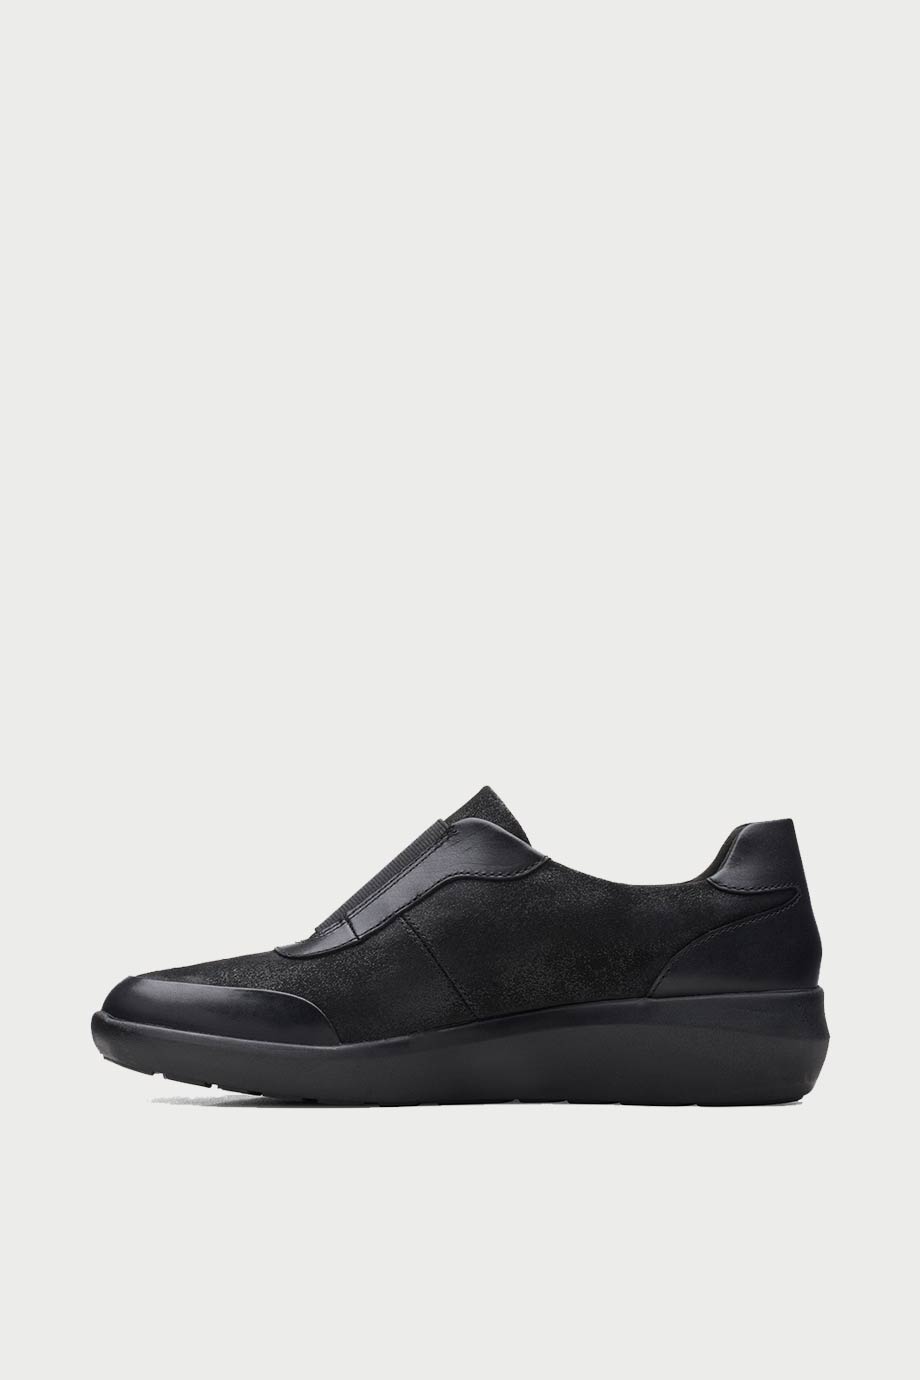 spiridoula metheniti shoes xalkida p kayleigh peak black leather clarks 5